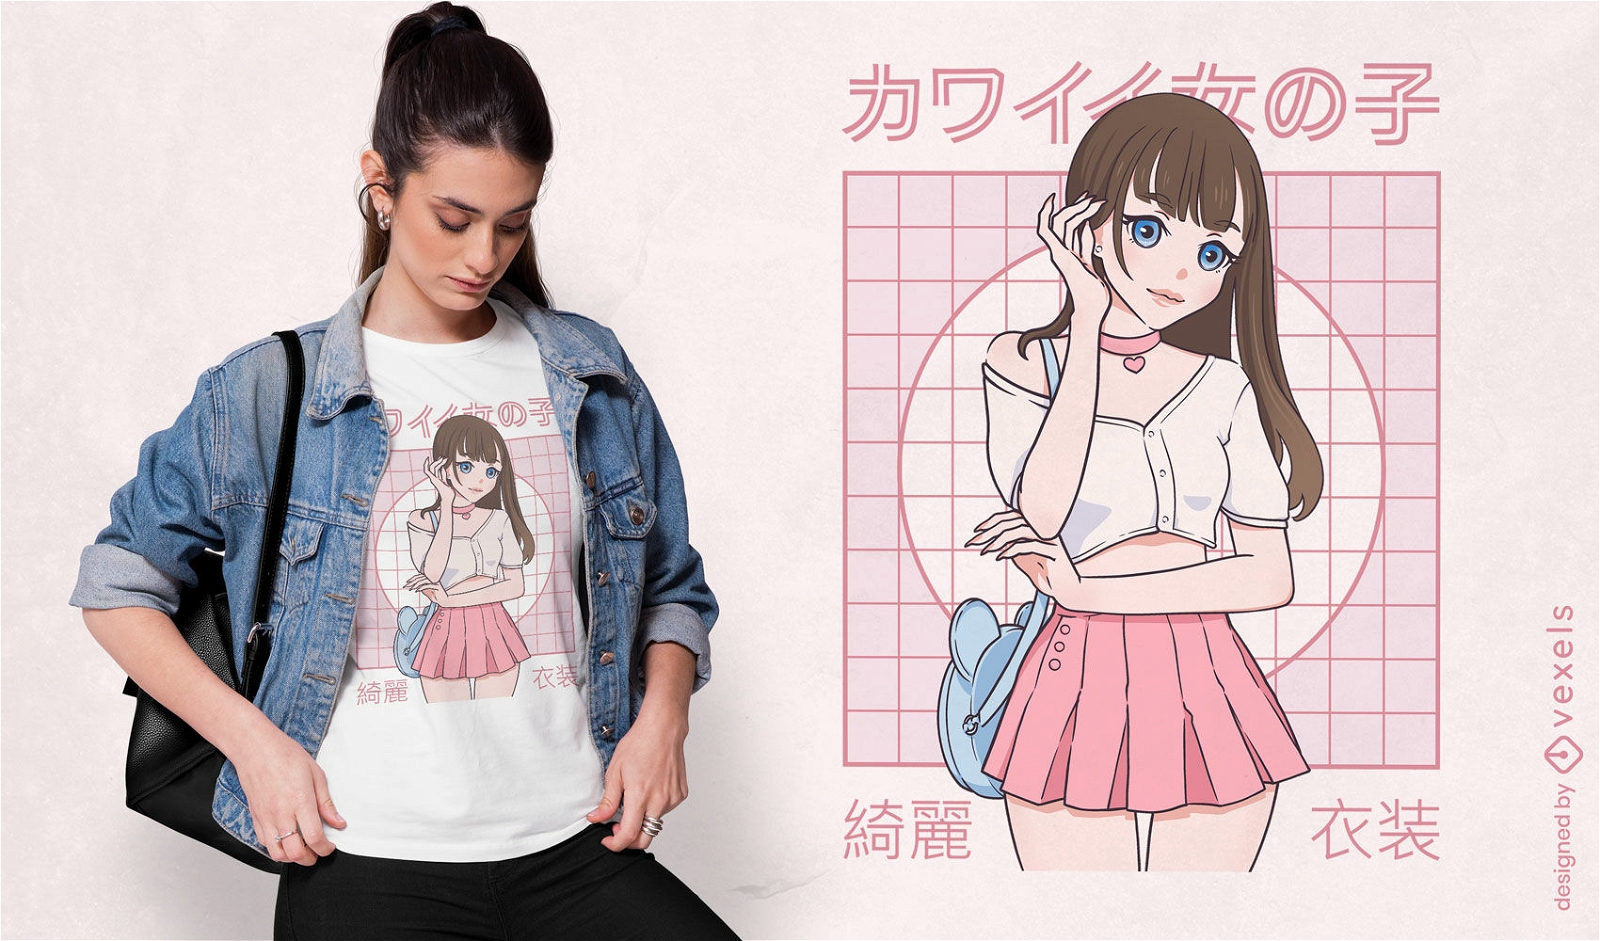 Dise?o de camiseta de modelo de chica japonesa de anime.